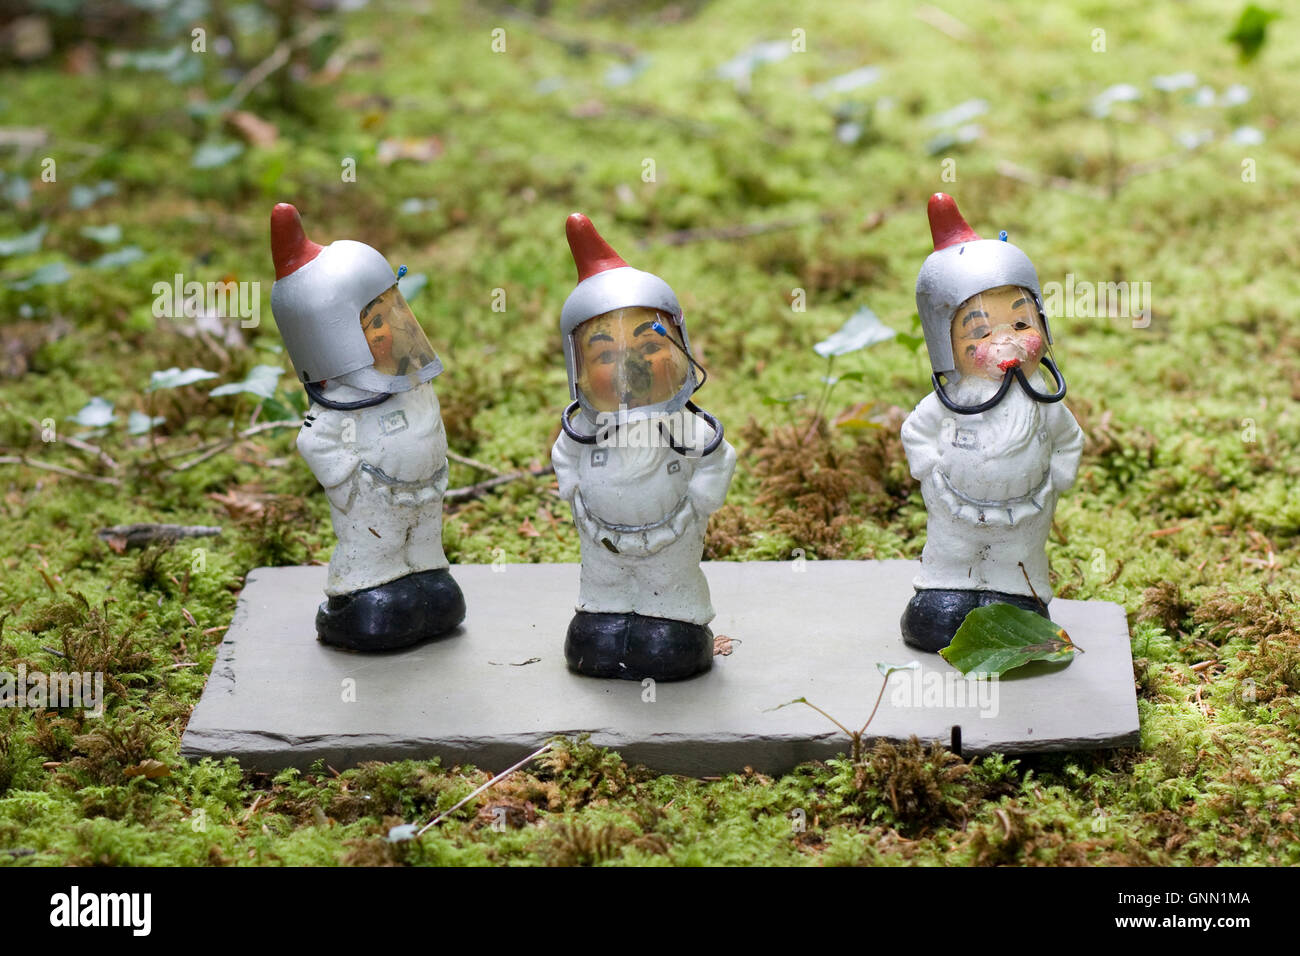 astronaut garden gnomes Stock Photo